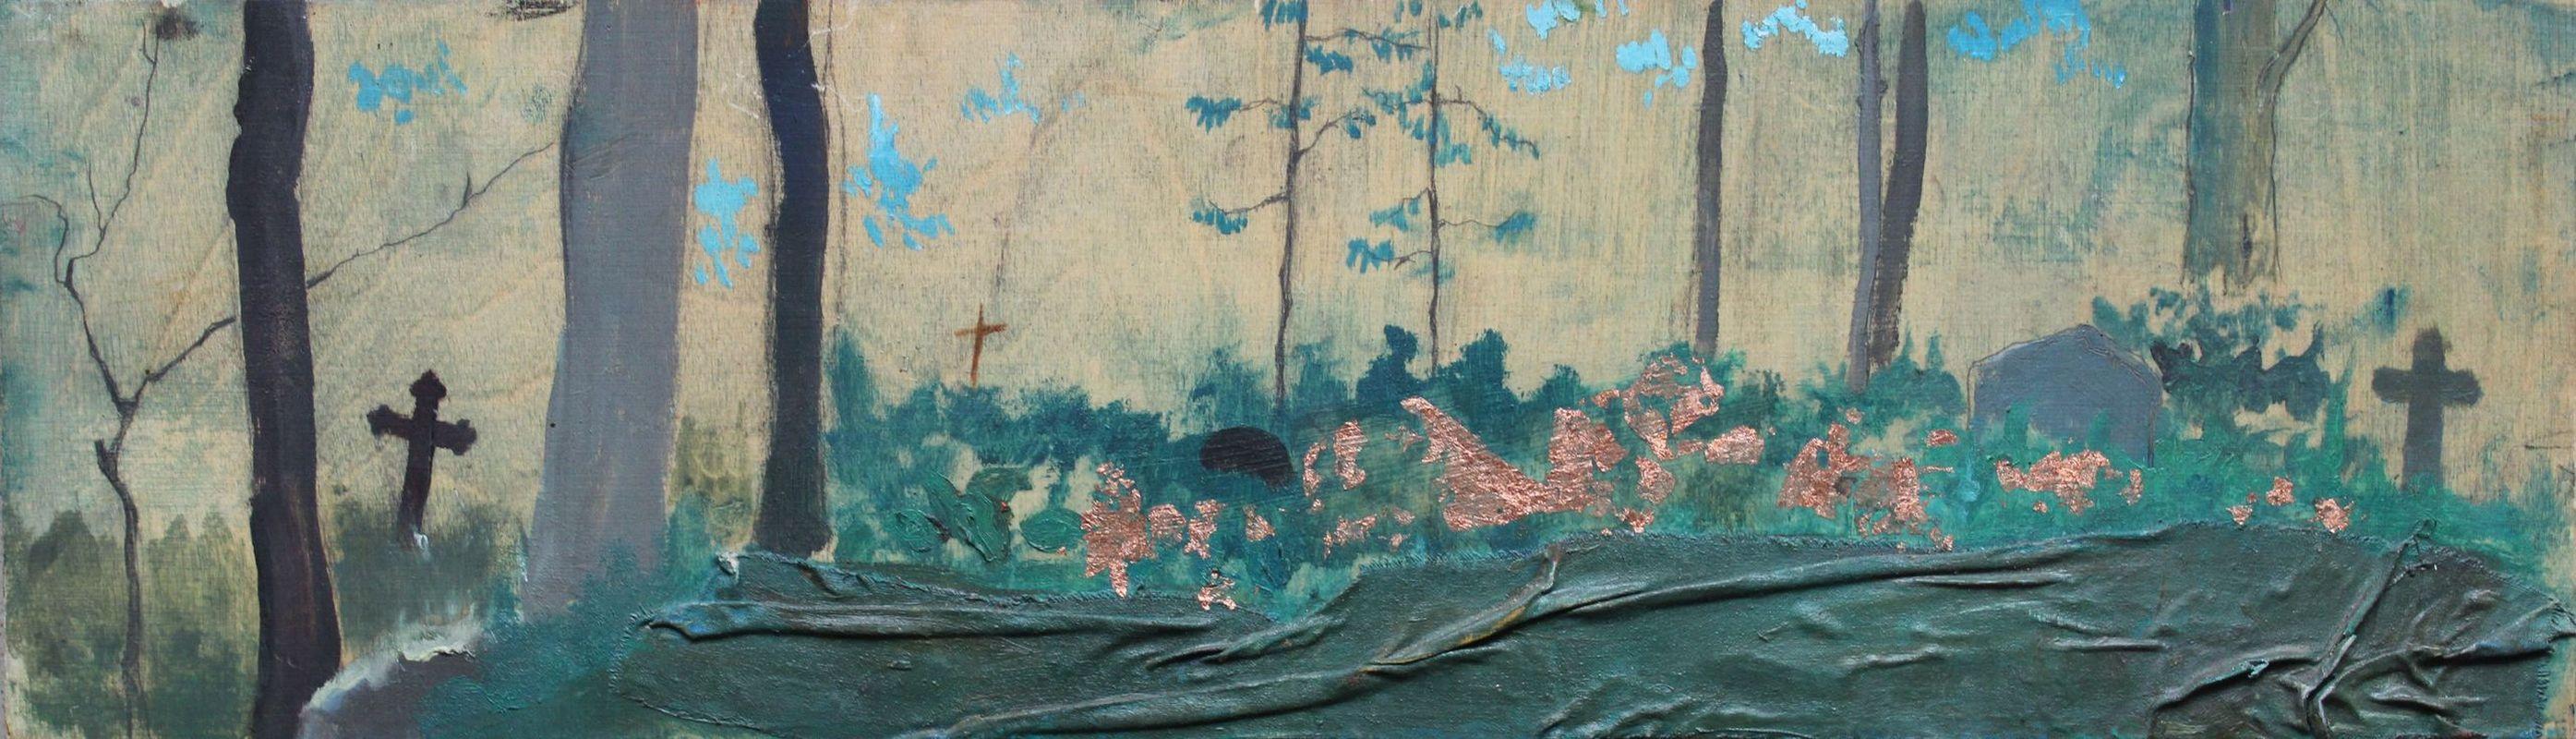 Aleksandra Rafaela Tiknuse Landscape Painting - The old cemetery. 2018. Oil on wooden plywood. 16x54.4 cm